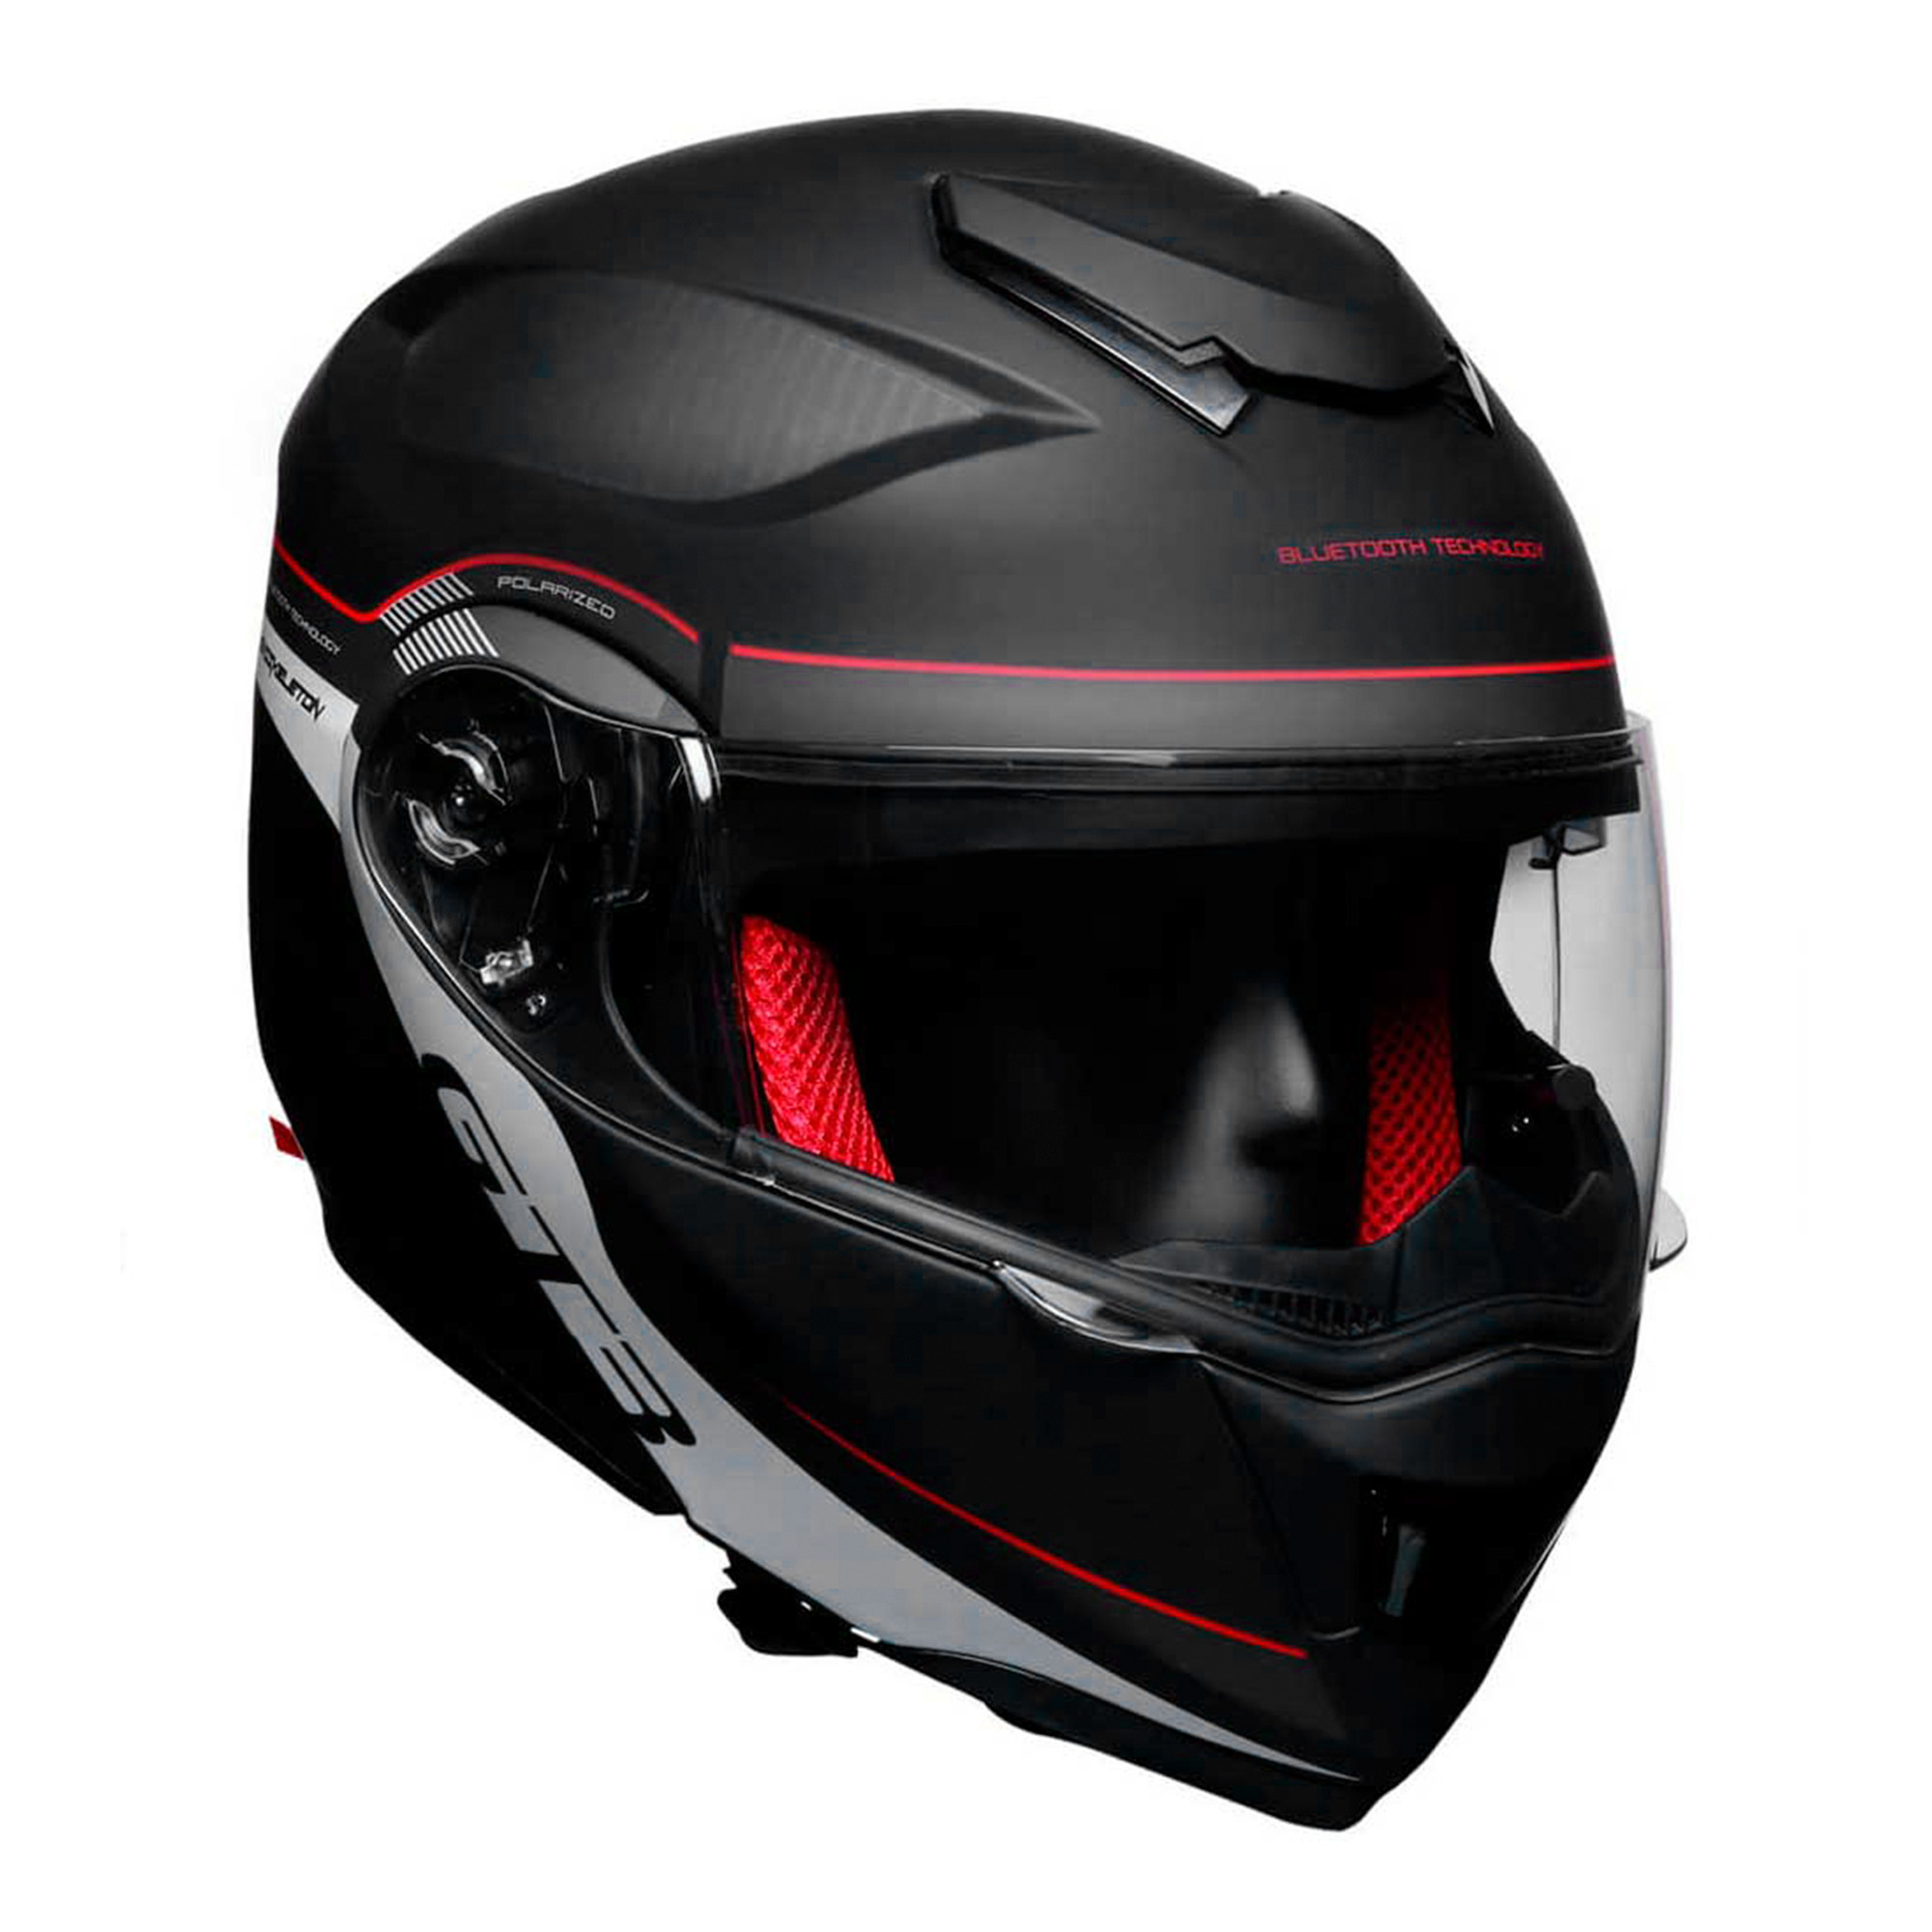 Comprar Casco de seguridad para motocicleta, casco Bluetooth de